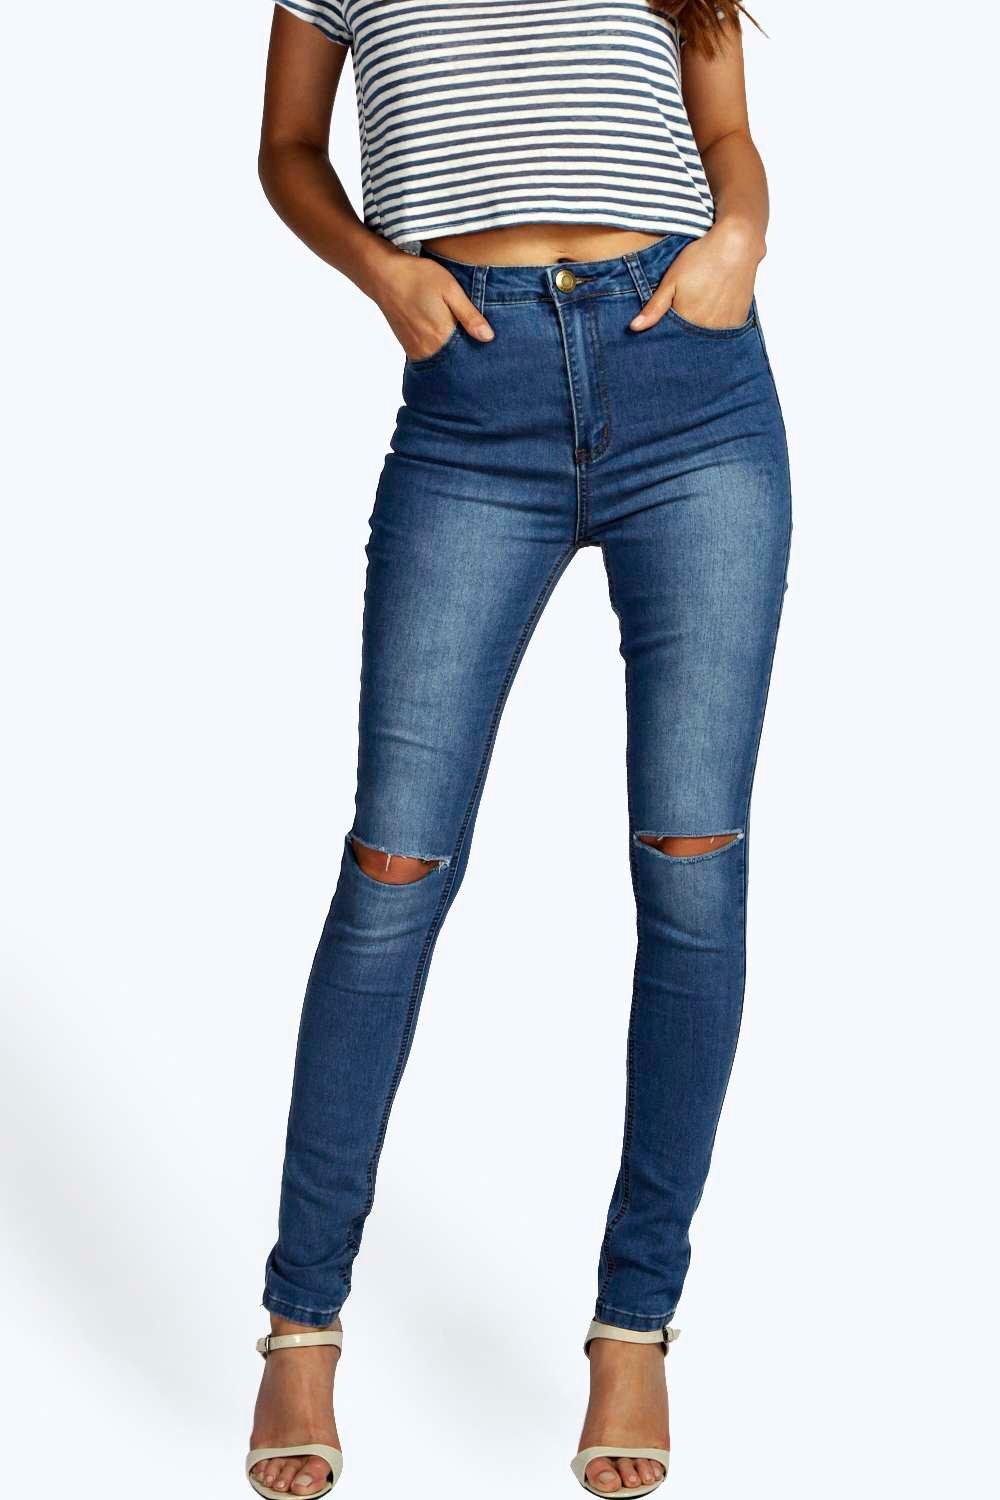 Anee High Waisted Split Knee Skinny Jeans at boohoo.com